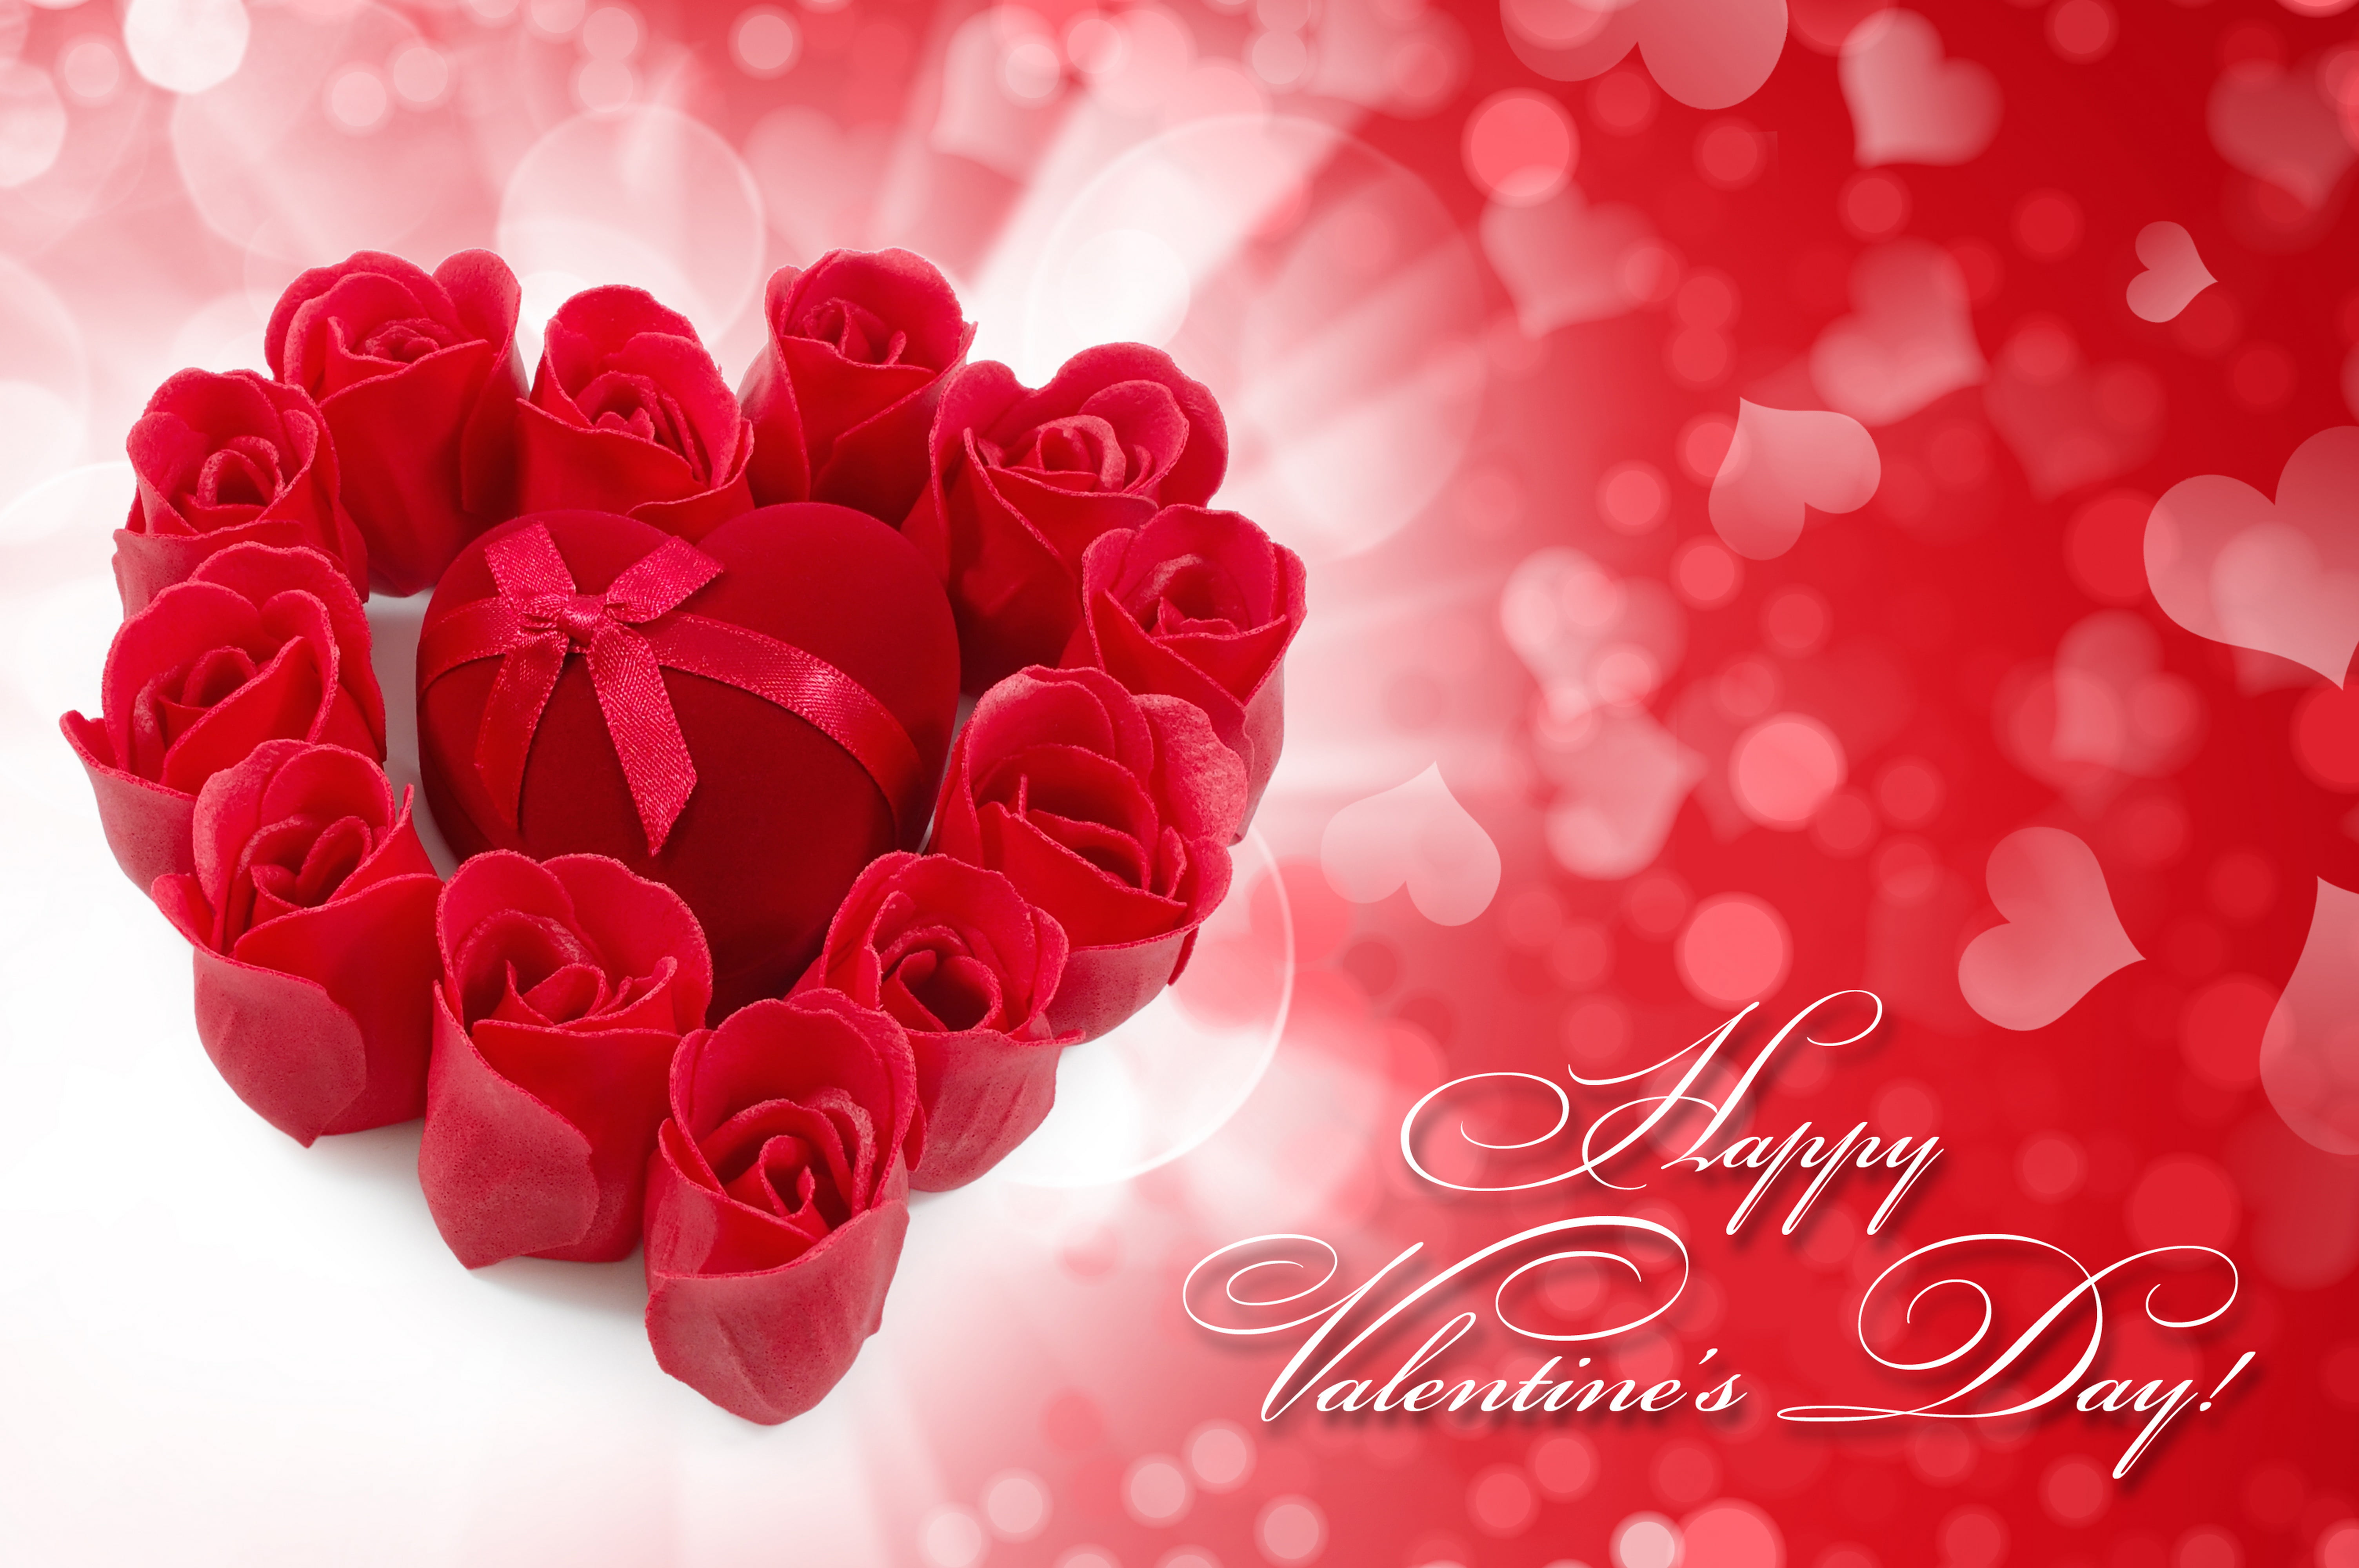 HD wallpaper: Happy Valentine's Day digital wallpaper, gift, hearts